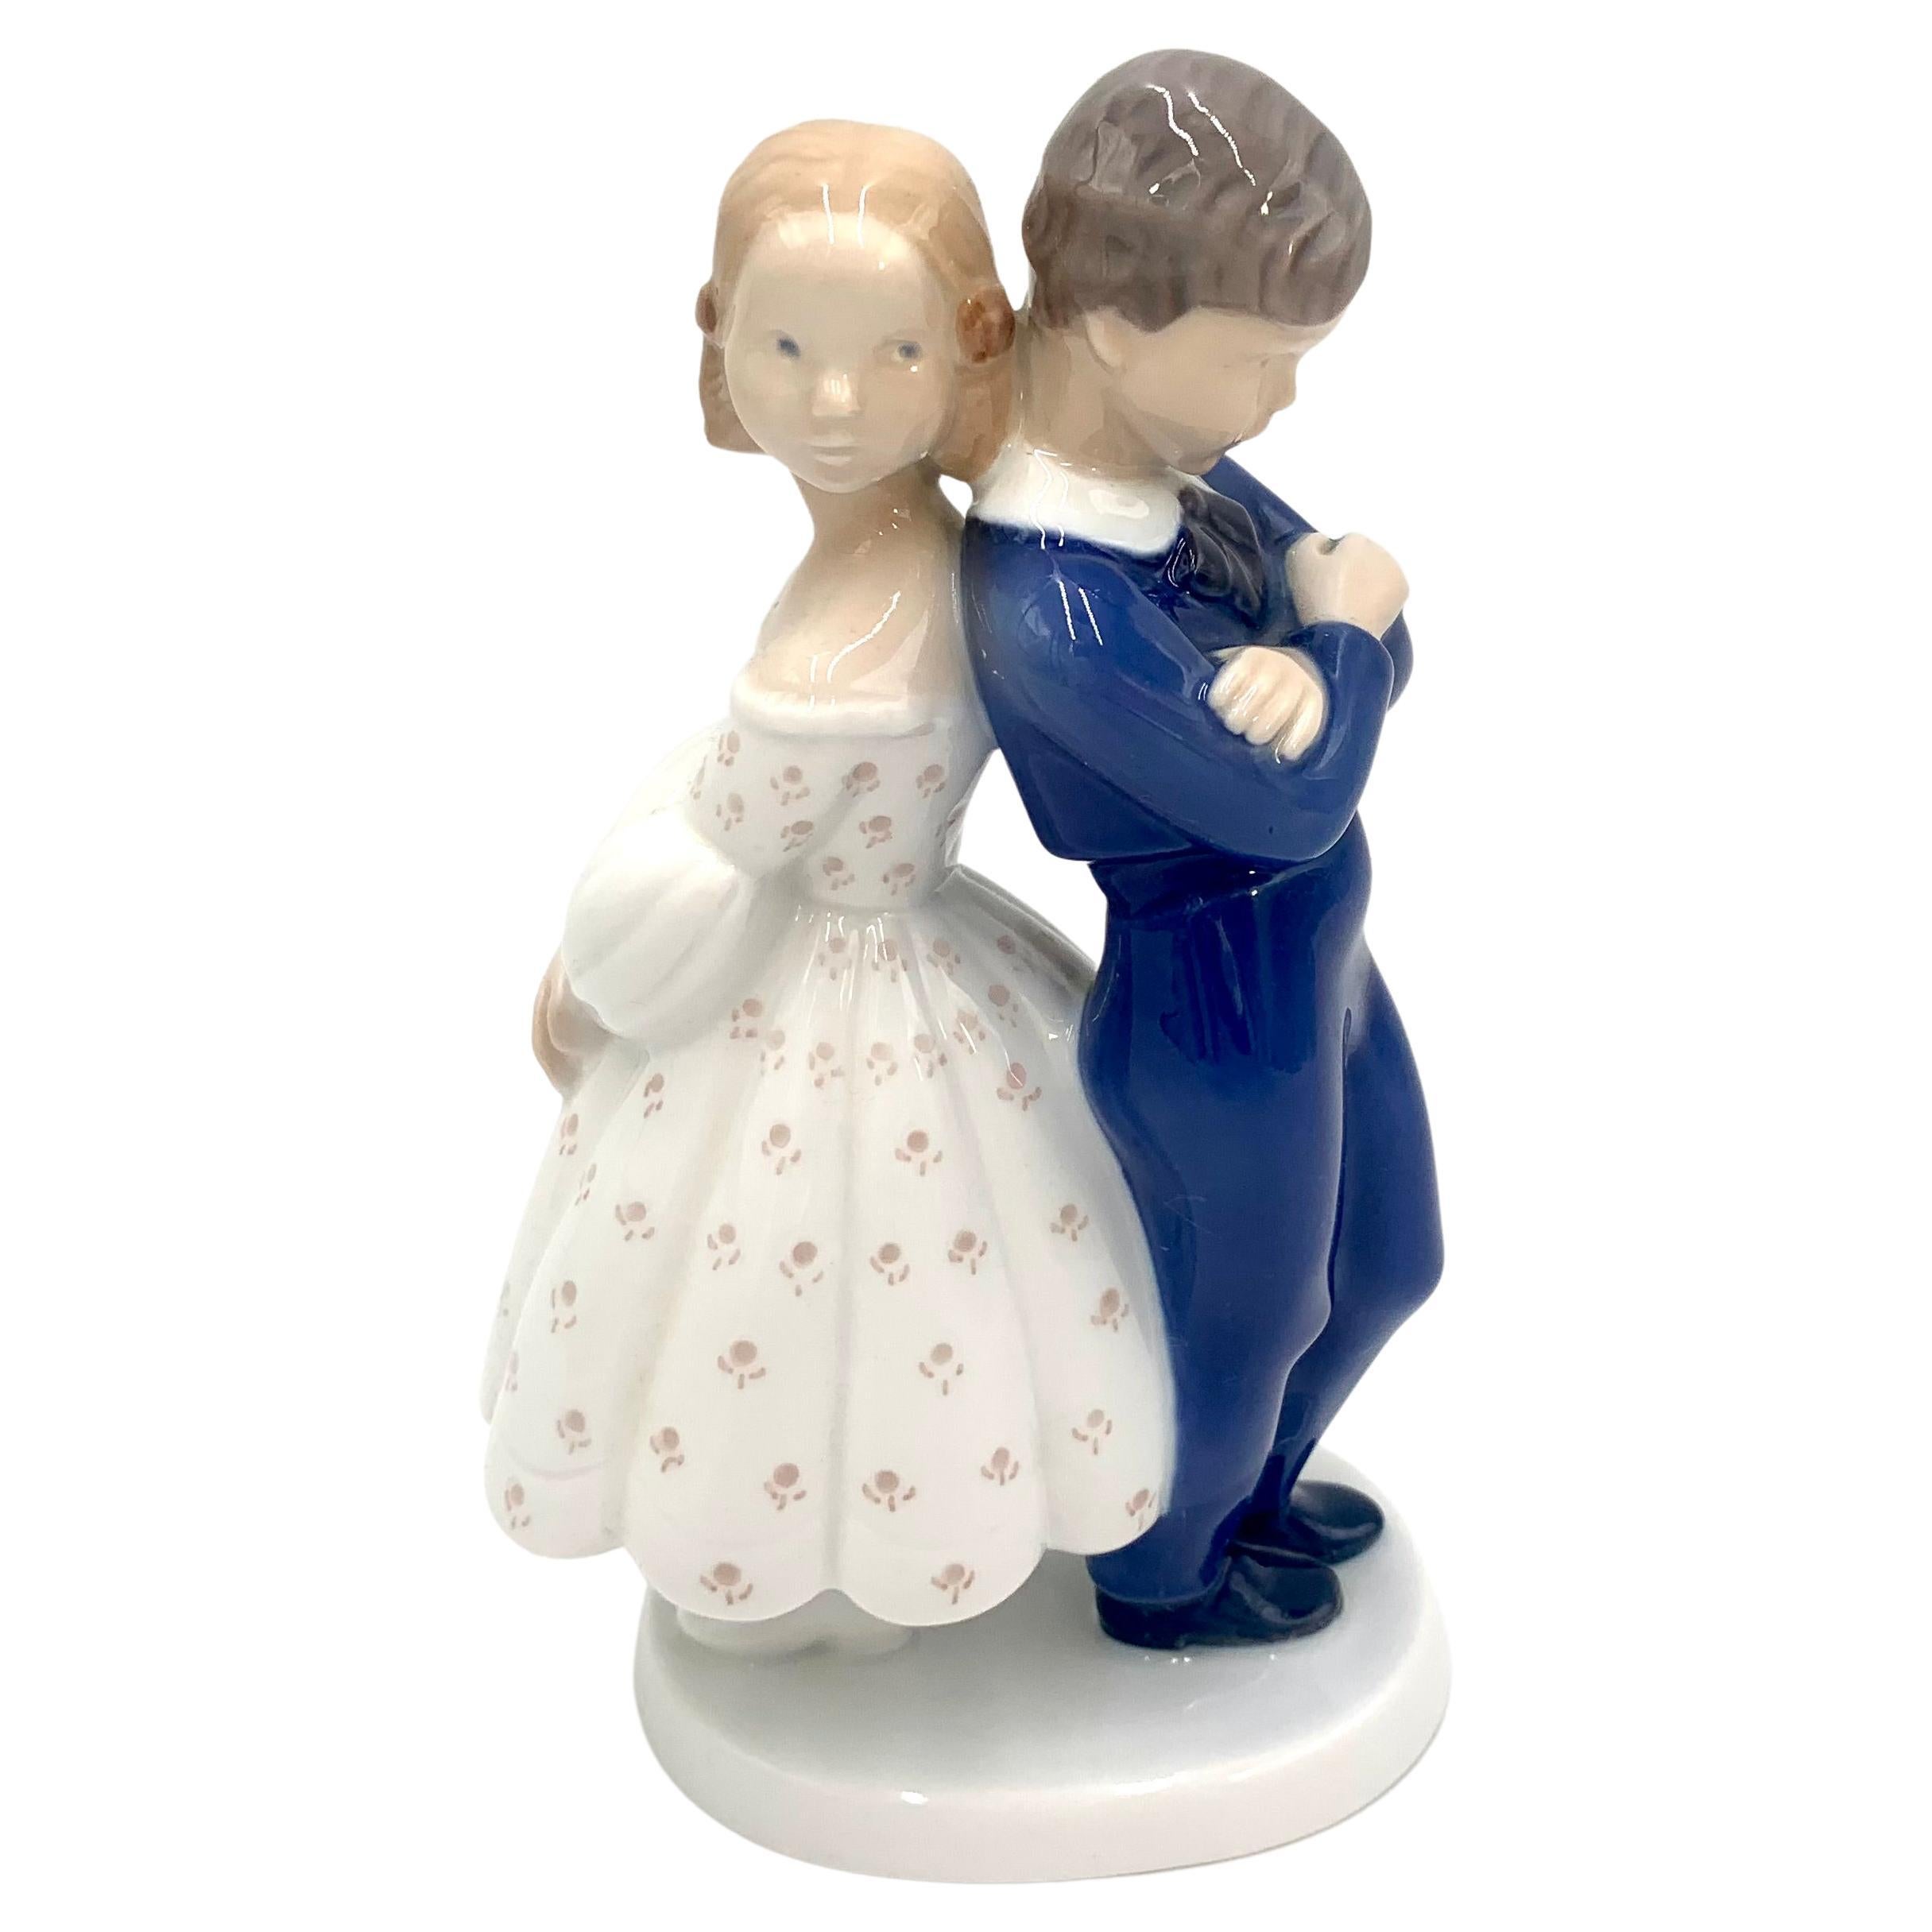 Porcelain Figurine of a Couple, Bing & Grondahl, Denmark